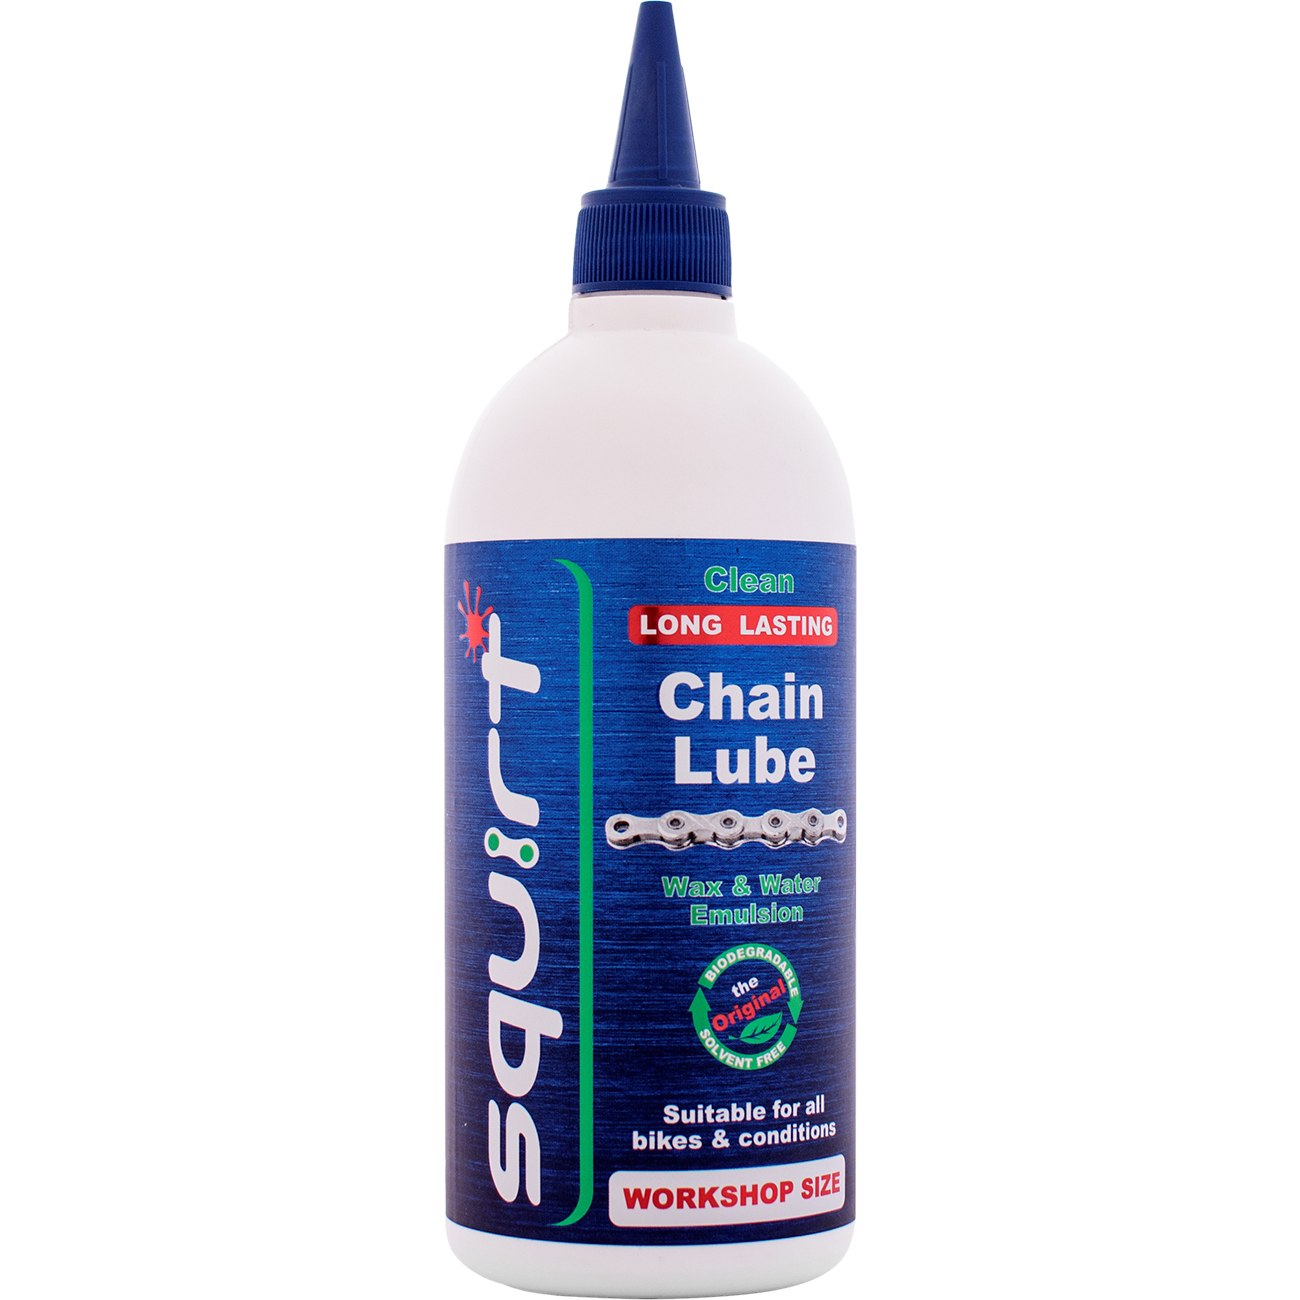 Productfoto van Squirt Lube Long Lasting Dry Chain Lube - 500ml